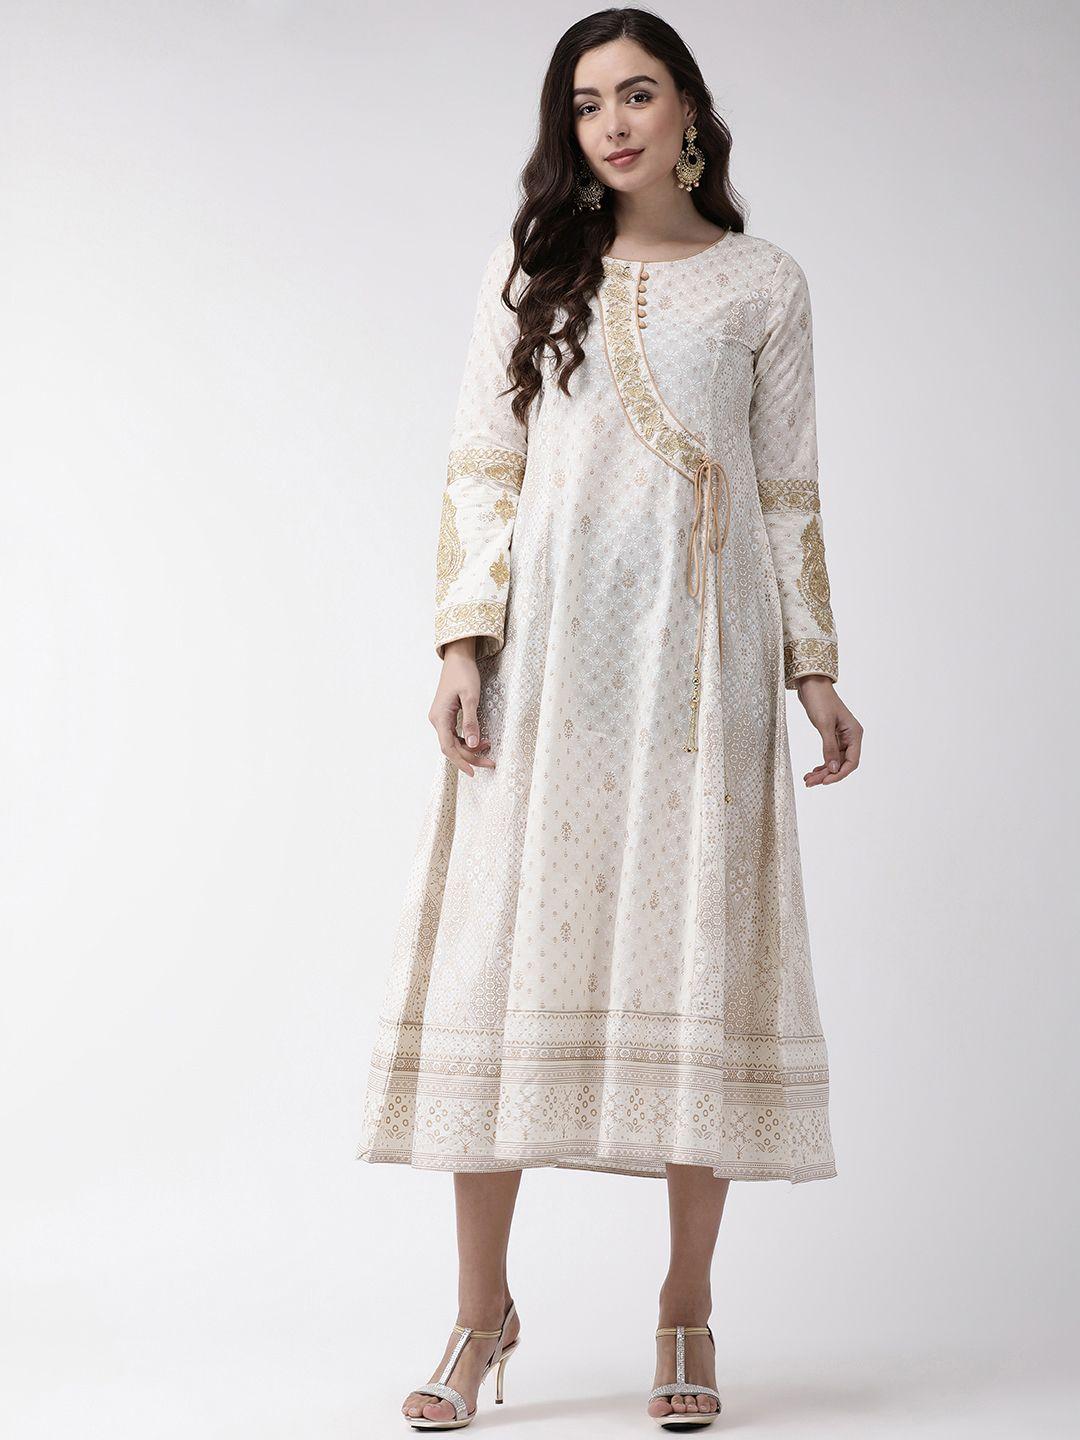 rangmayee-women-off-white-&-golden-printed-a-line-dress